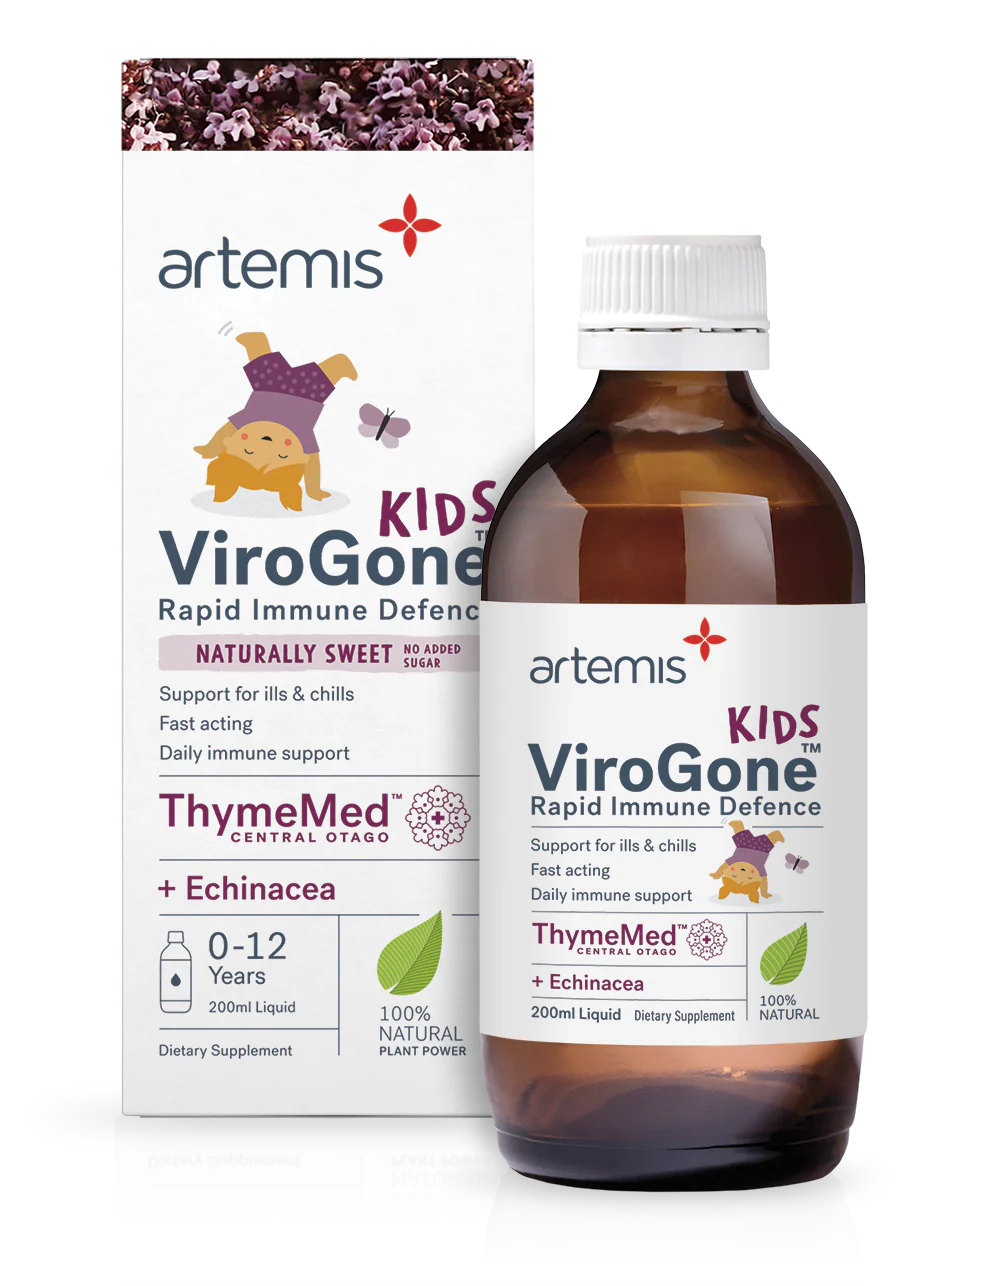 Artemis kids Virogone Rapid Immune Defense